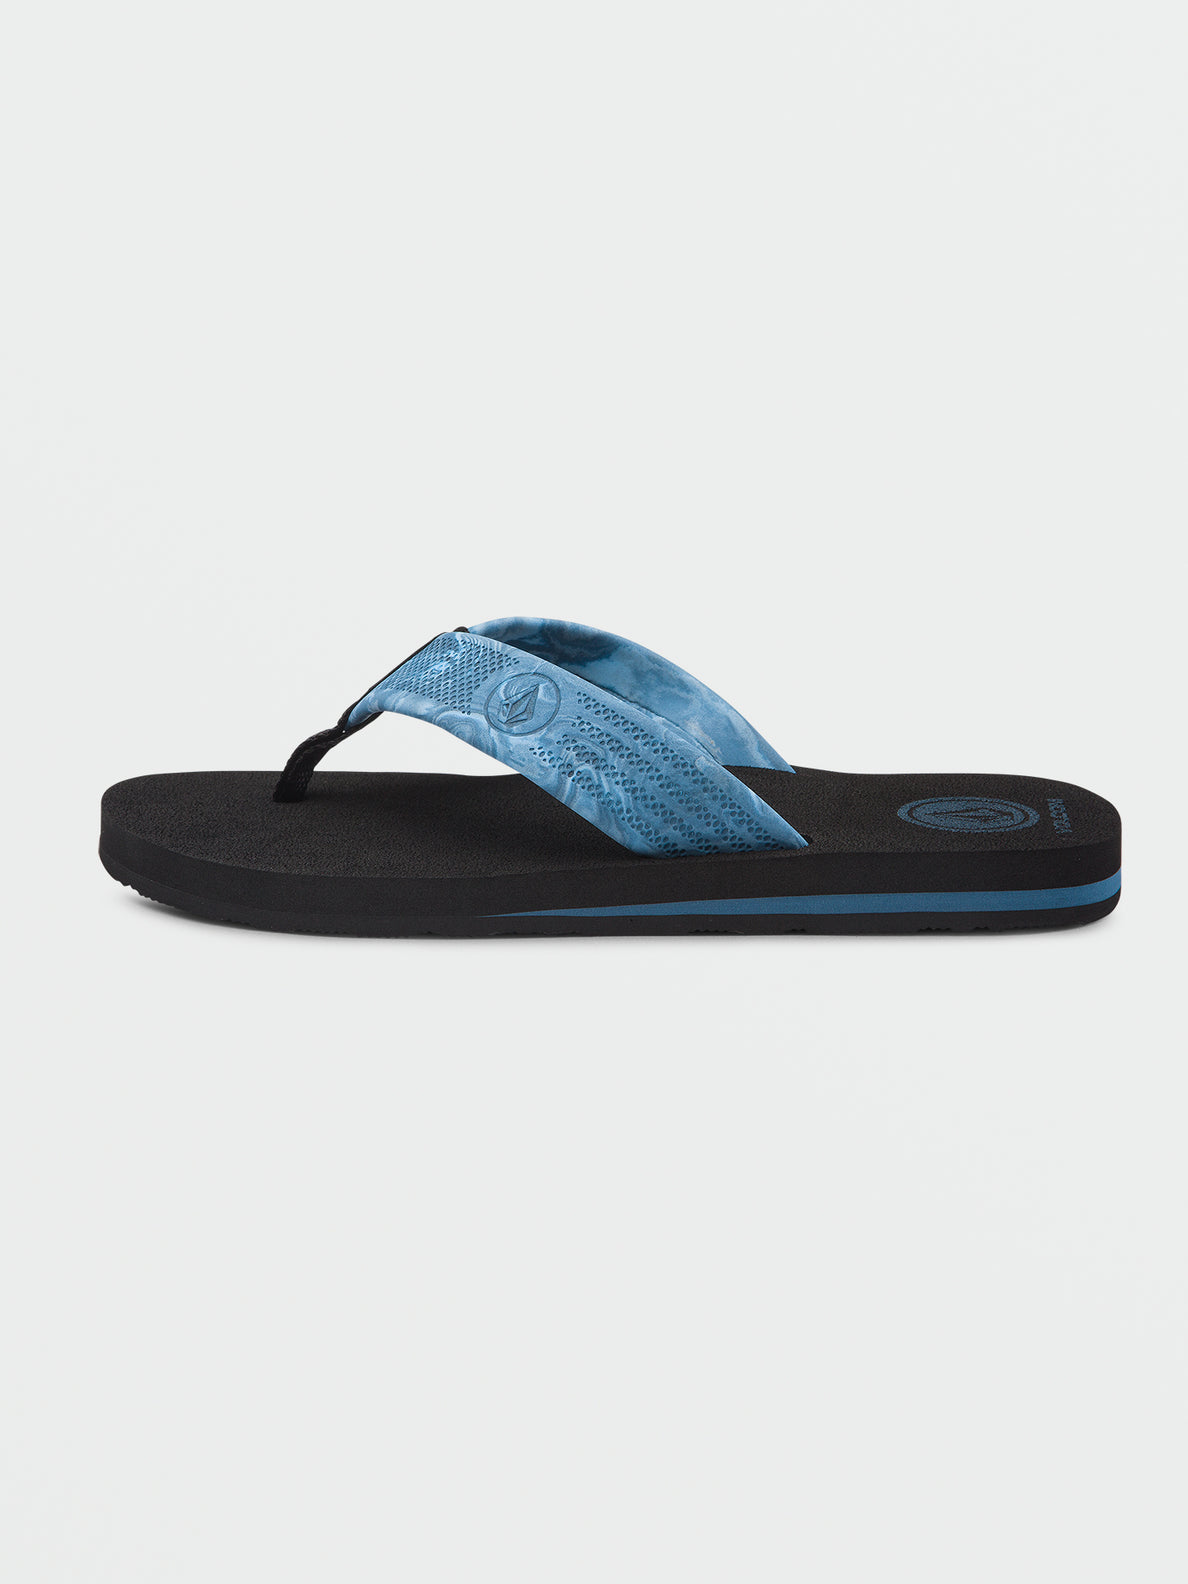 Daycation Sandals - Aged Indigo (V0812352_AIN) [1]